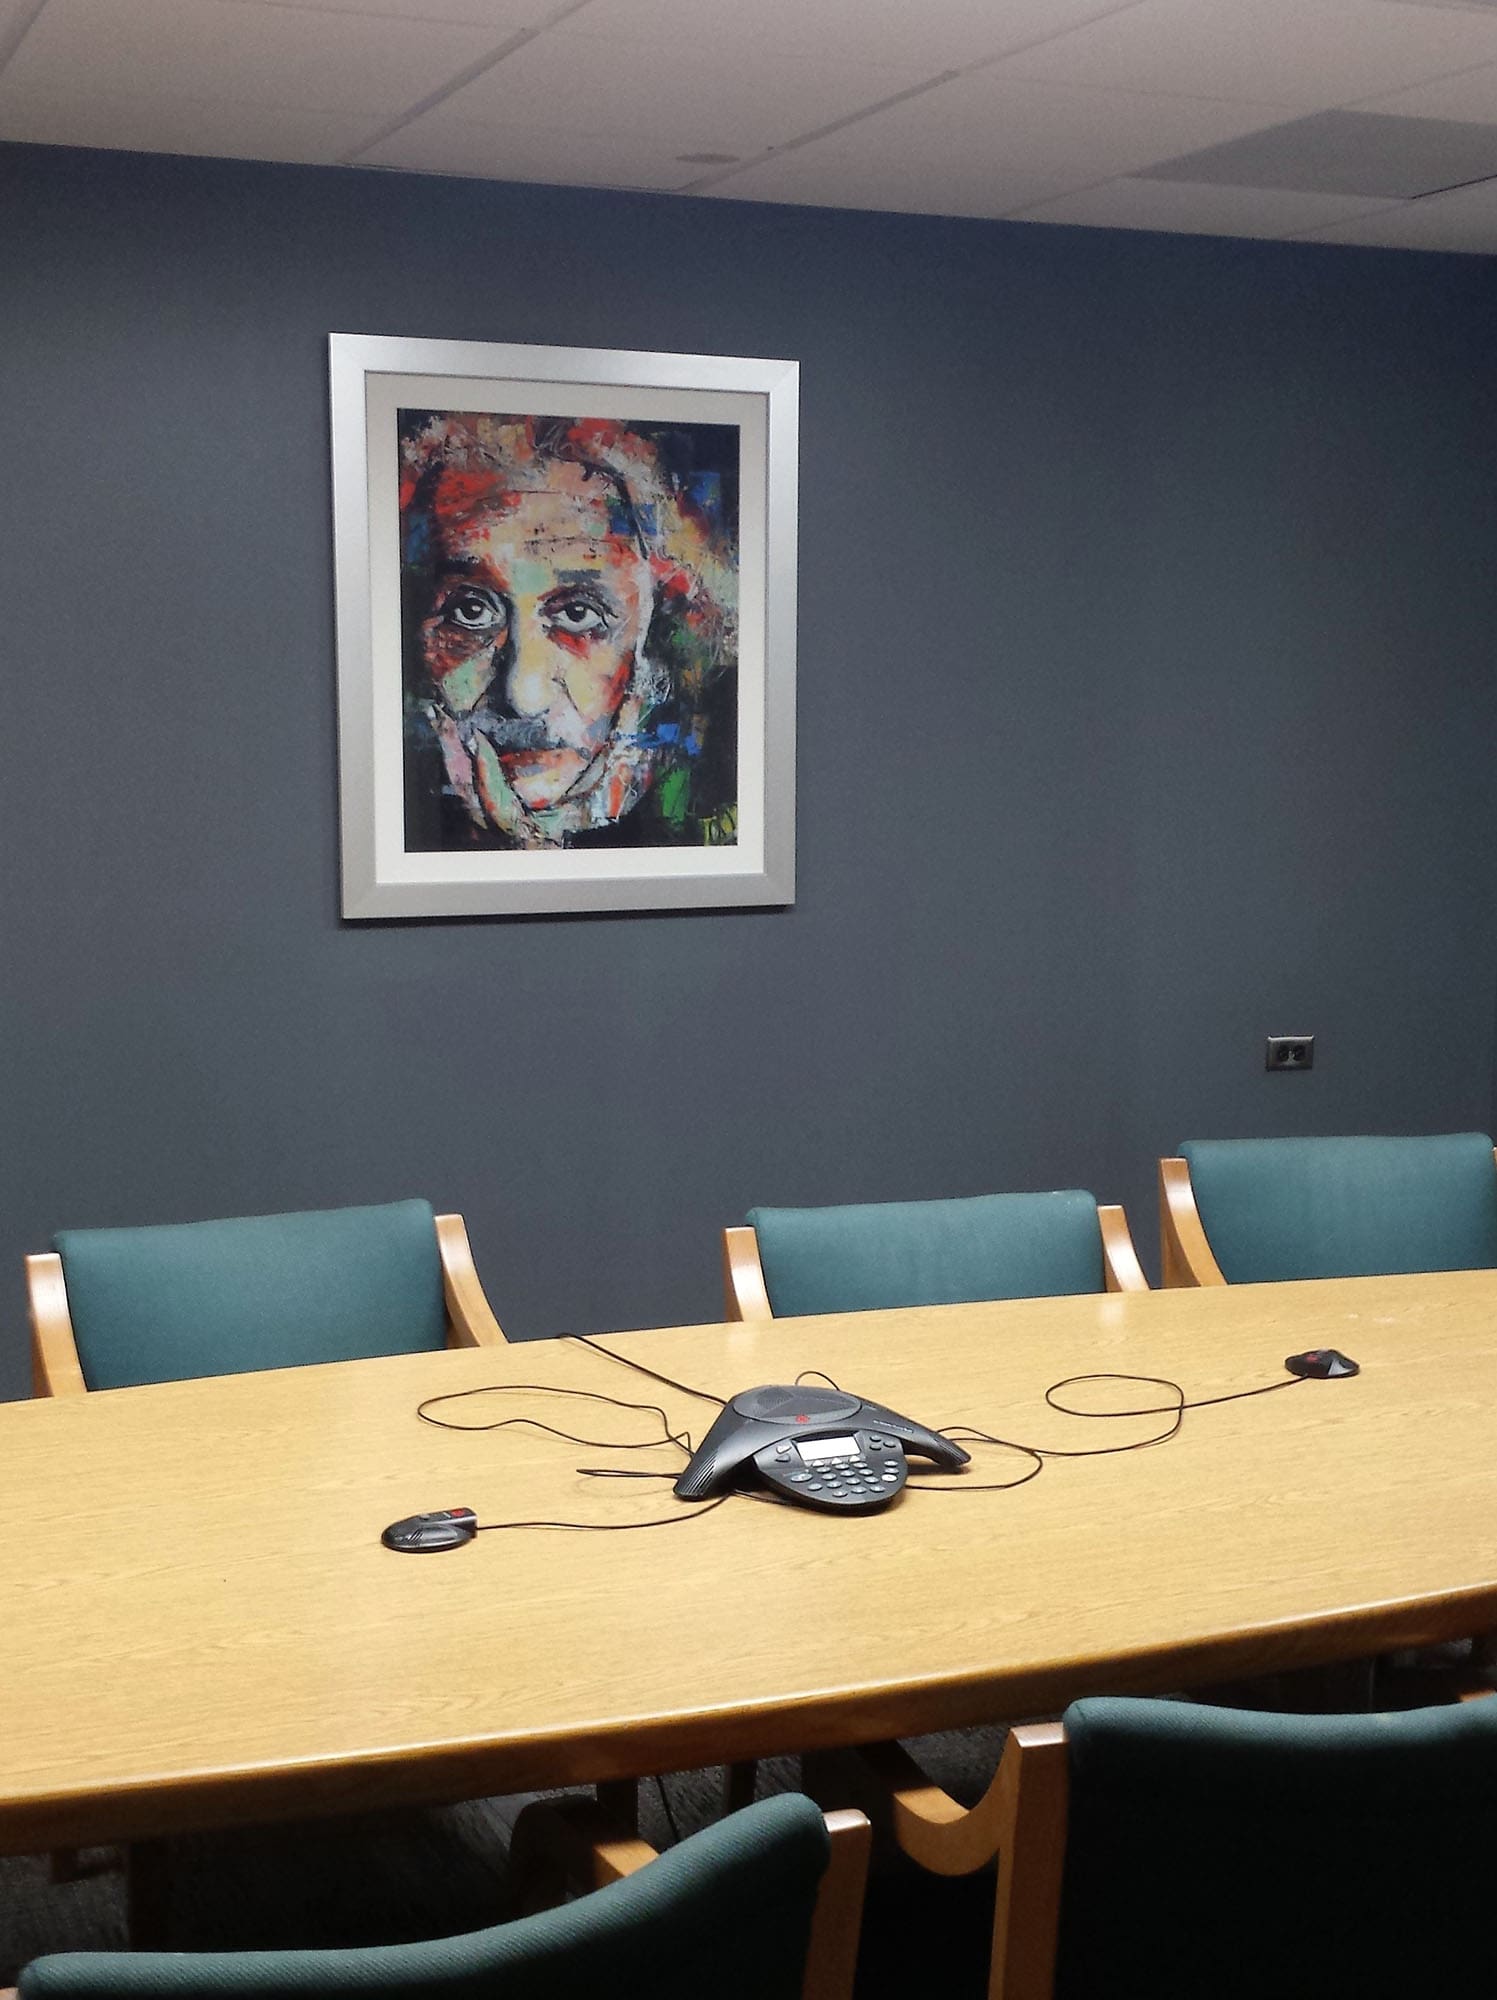 Albert Einstein Medical Center – Executive Suite, Philadelphia, PA